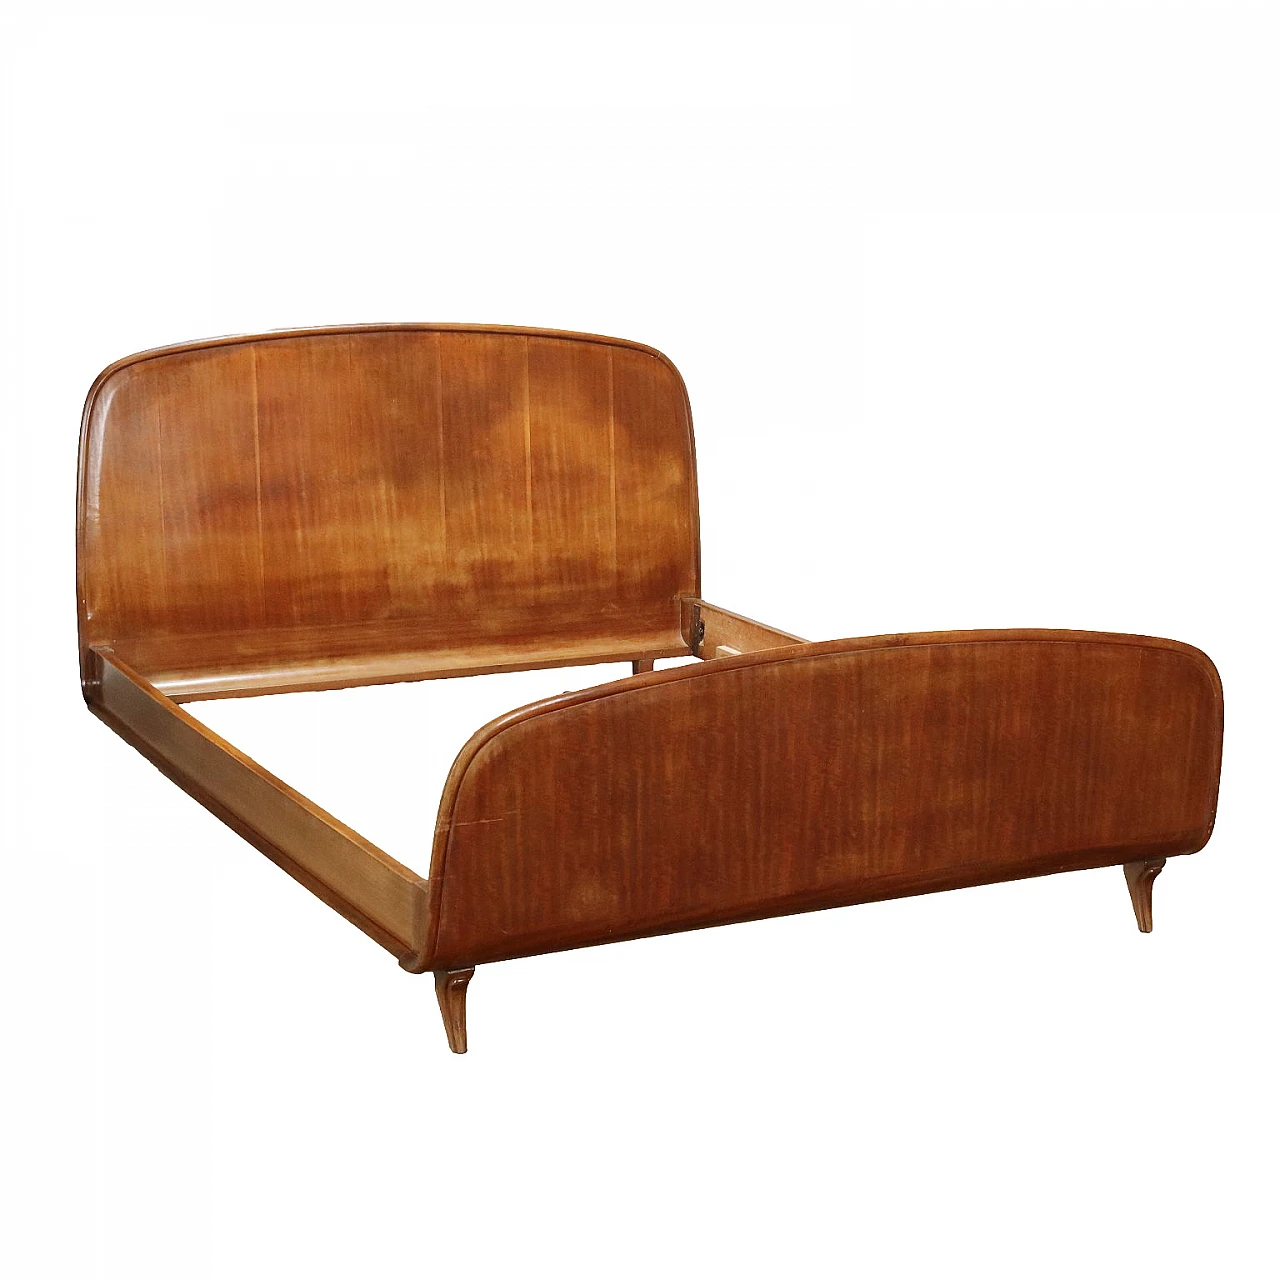 Double bed frame in mahogany veneer, 1950s 1